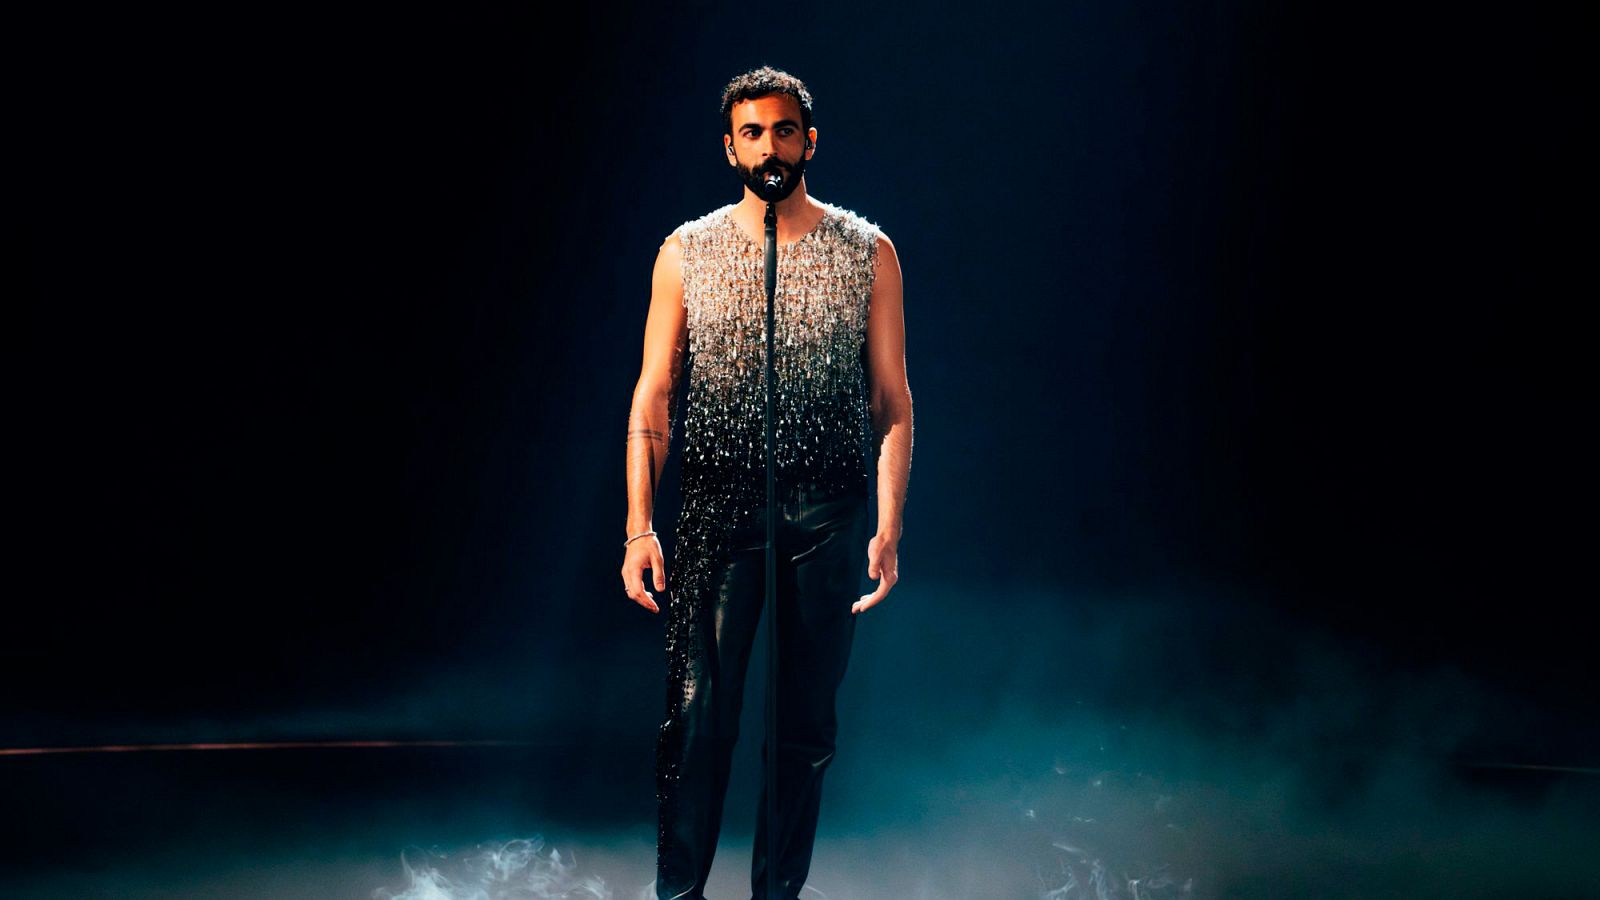 Italia - Marco Mengoni con "Due Vite" en la Final | Eurovisión